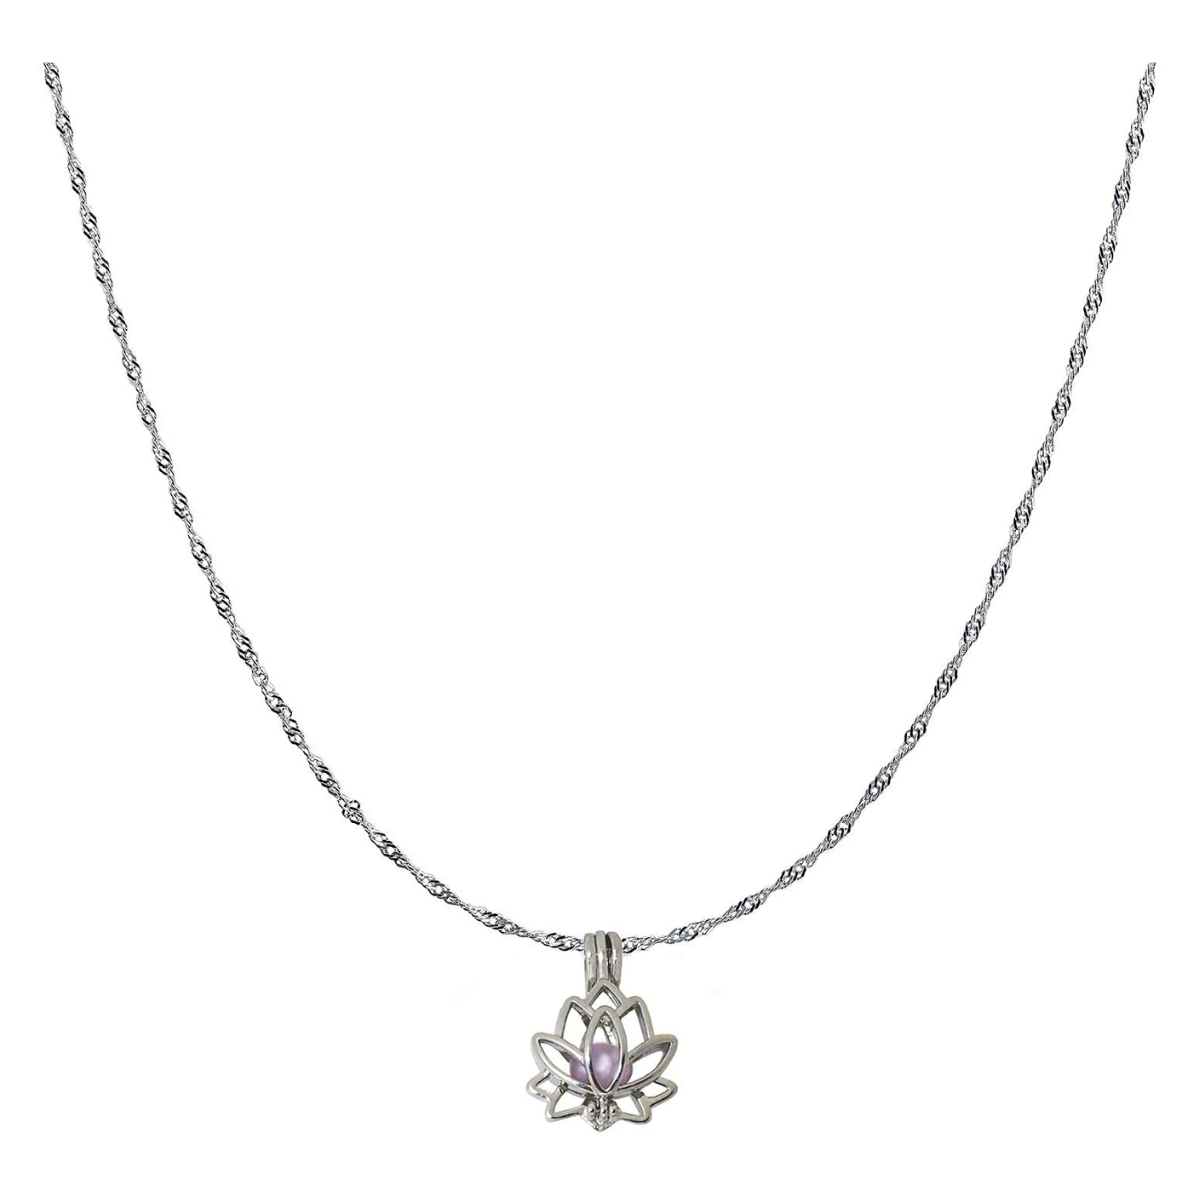 Precious Pearl Sterling Silver Necklace/Bracelet Kit